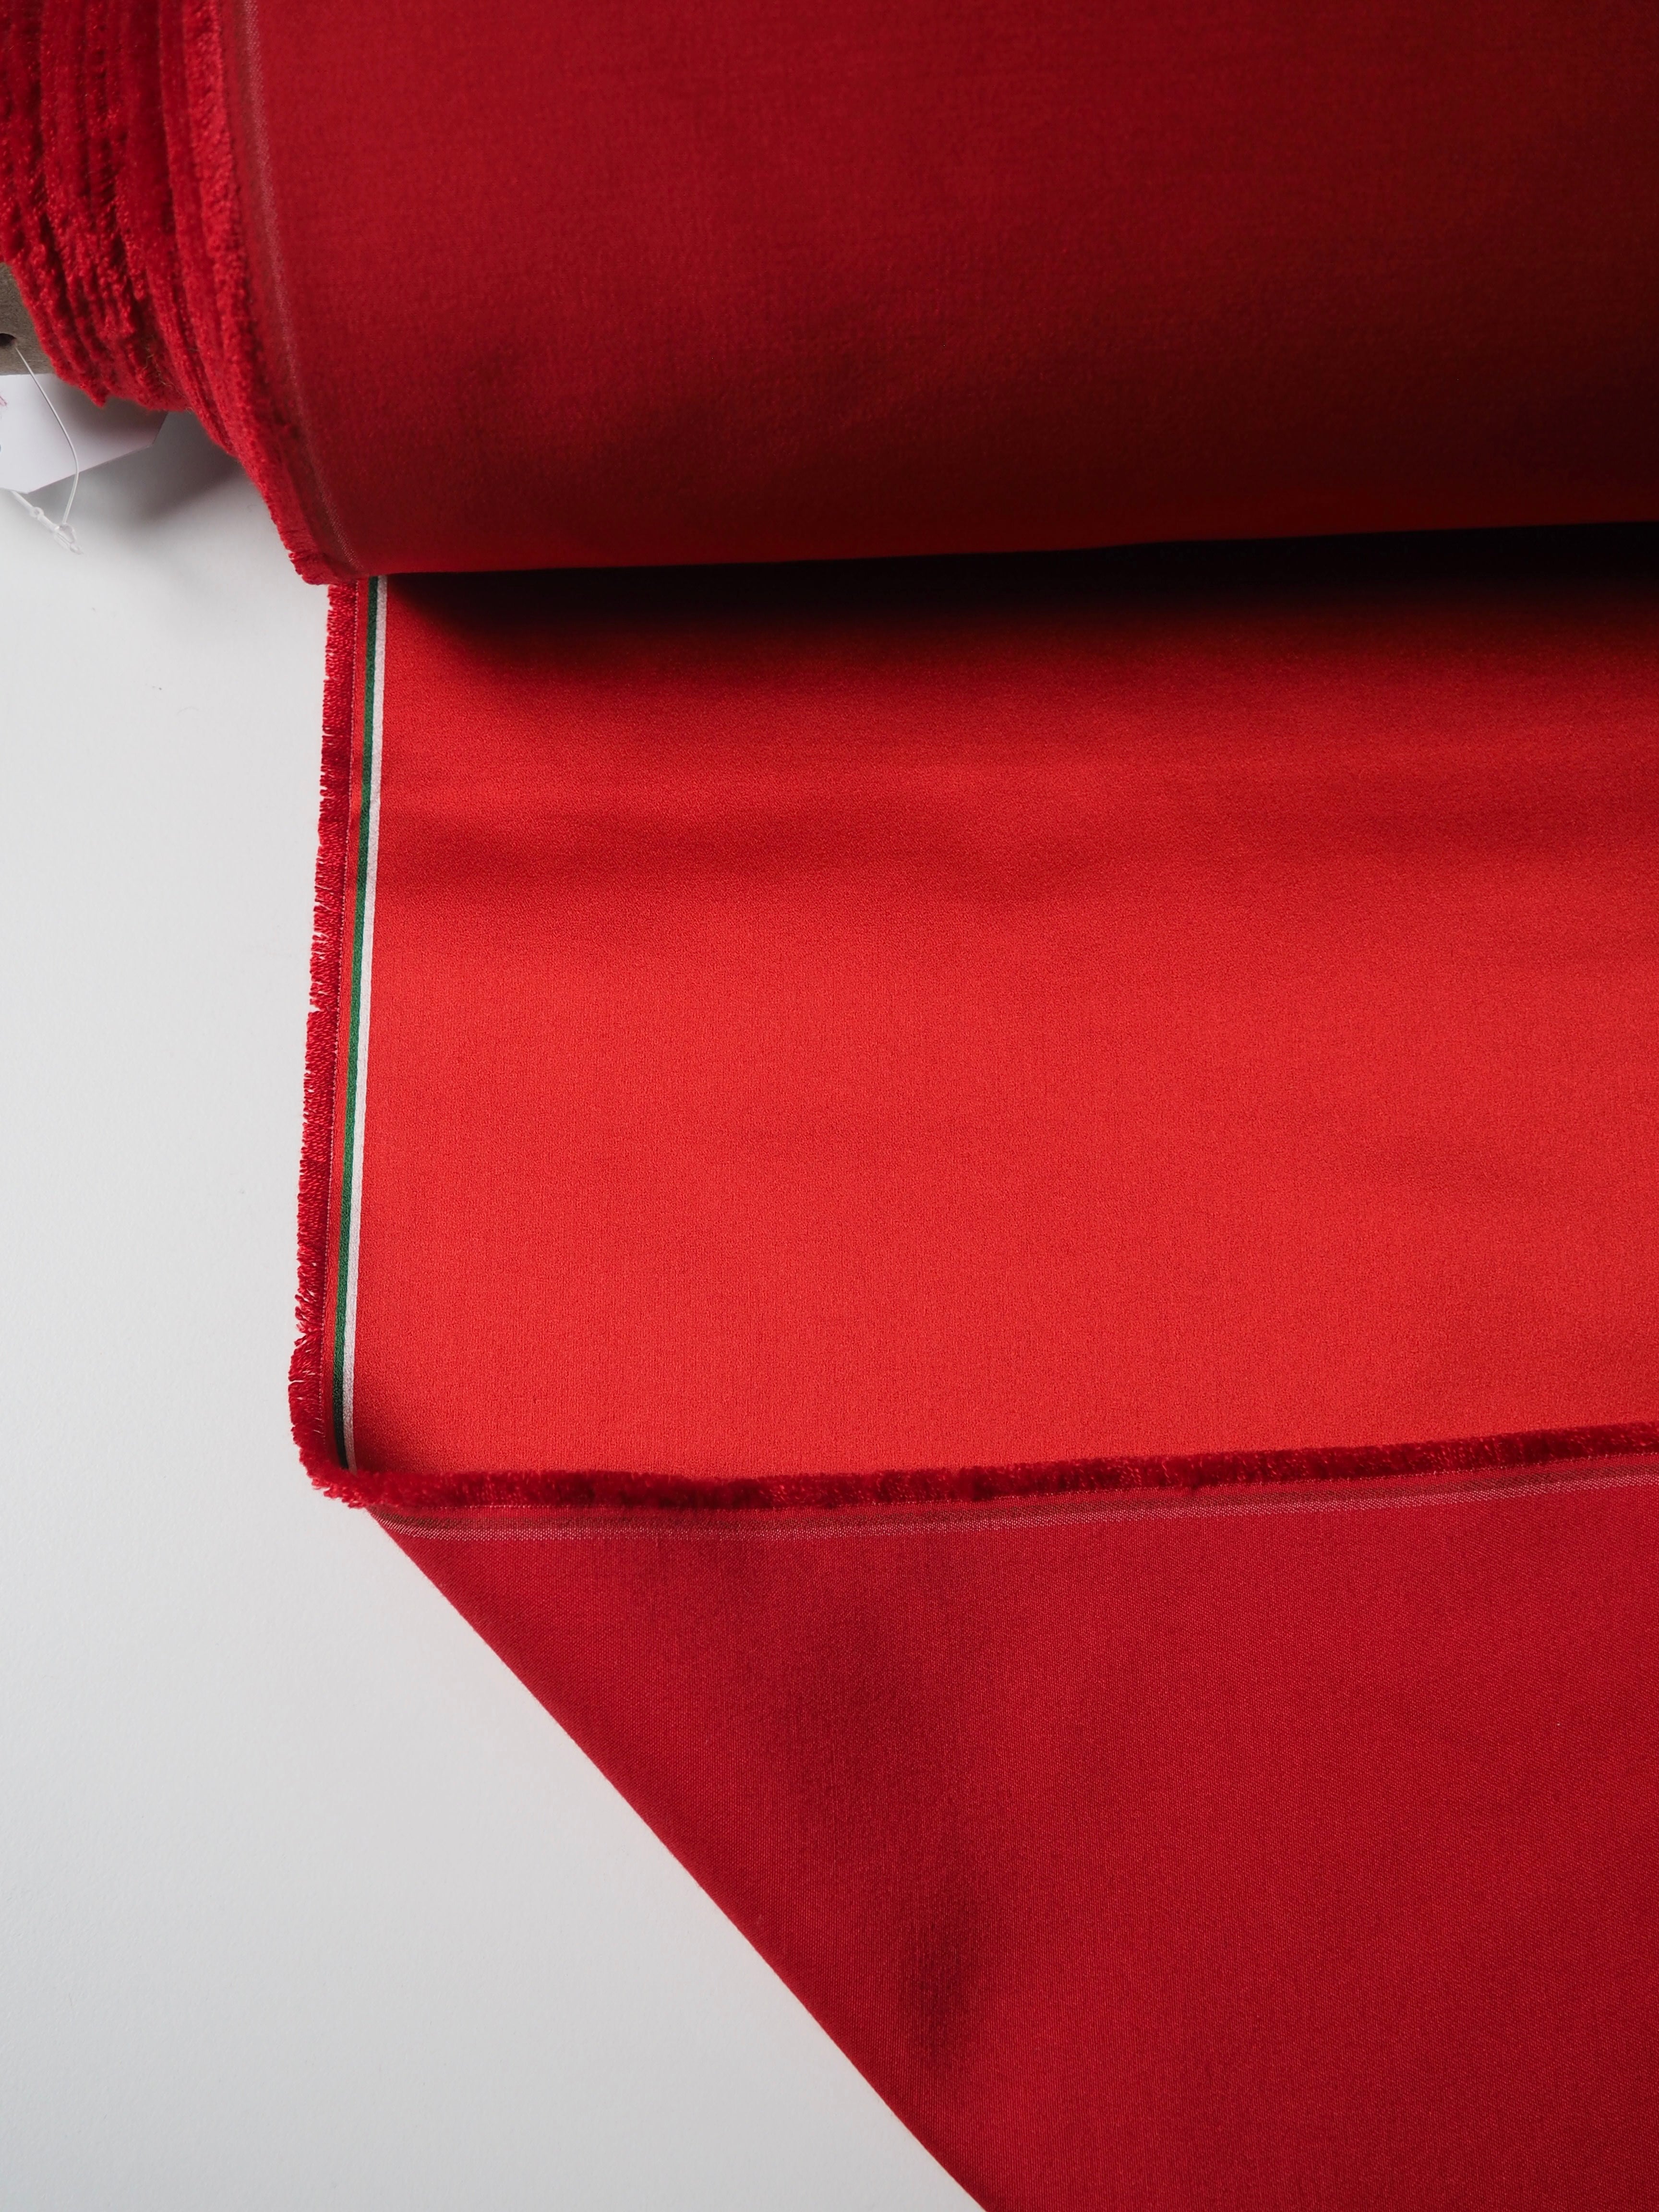 NY Designer Fabrics Bright Red Silk Duchess Satin Fabric